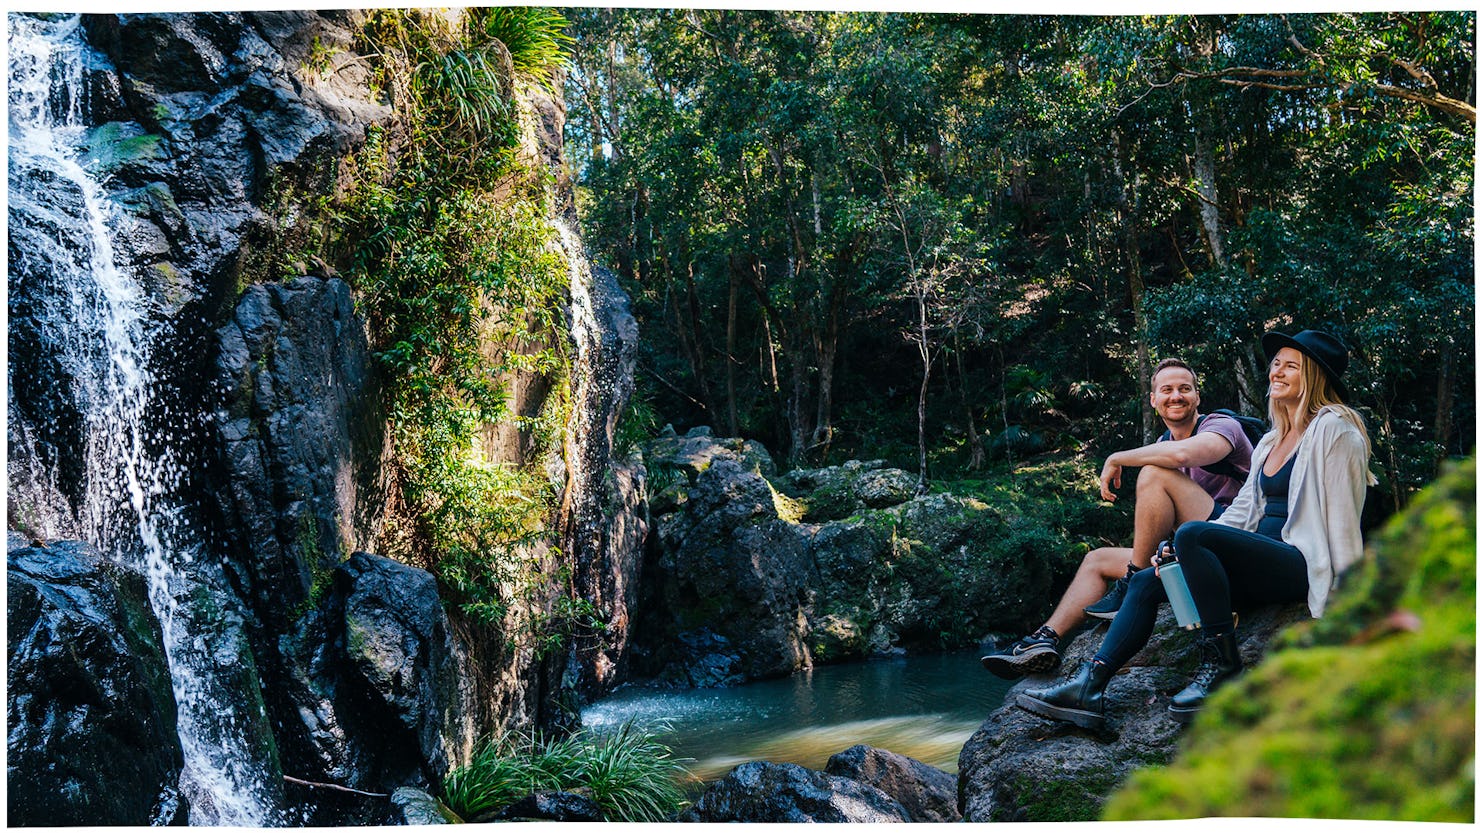 The Sunshine Coast’s undiscovered waterfalls